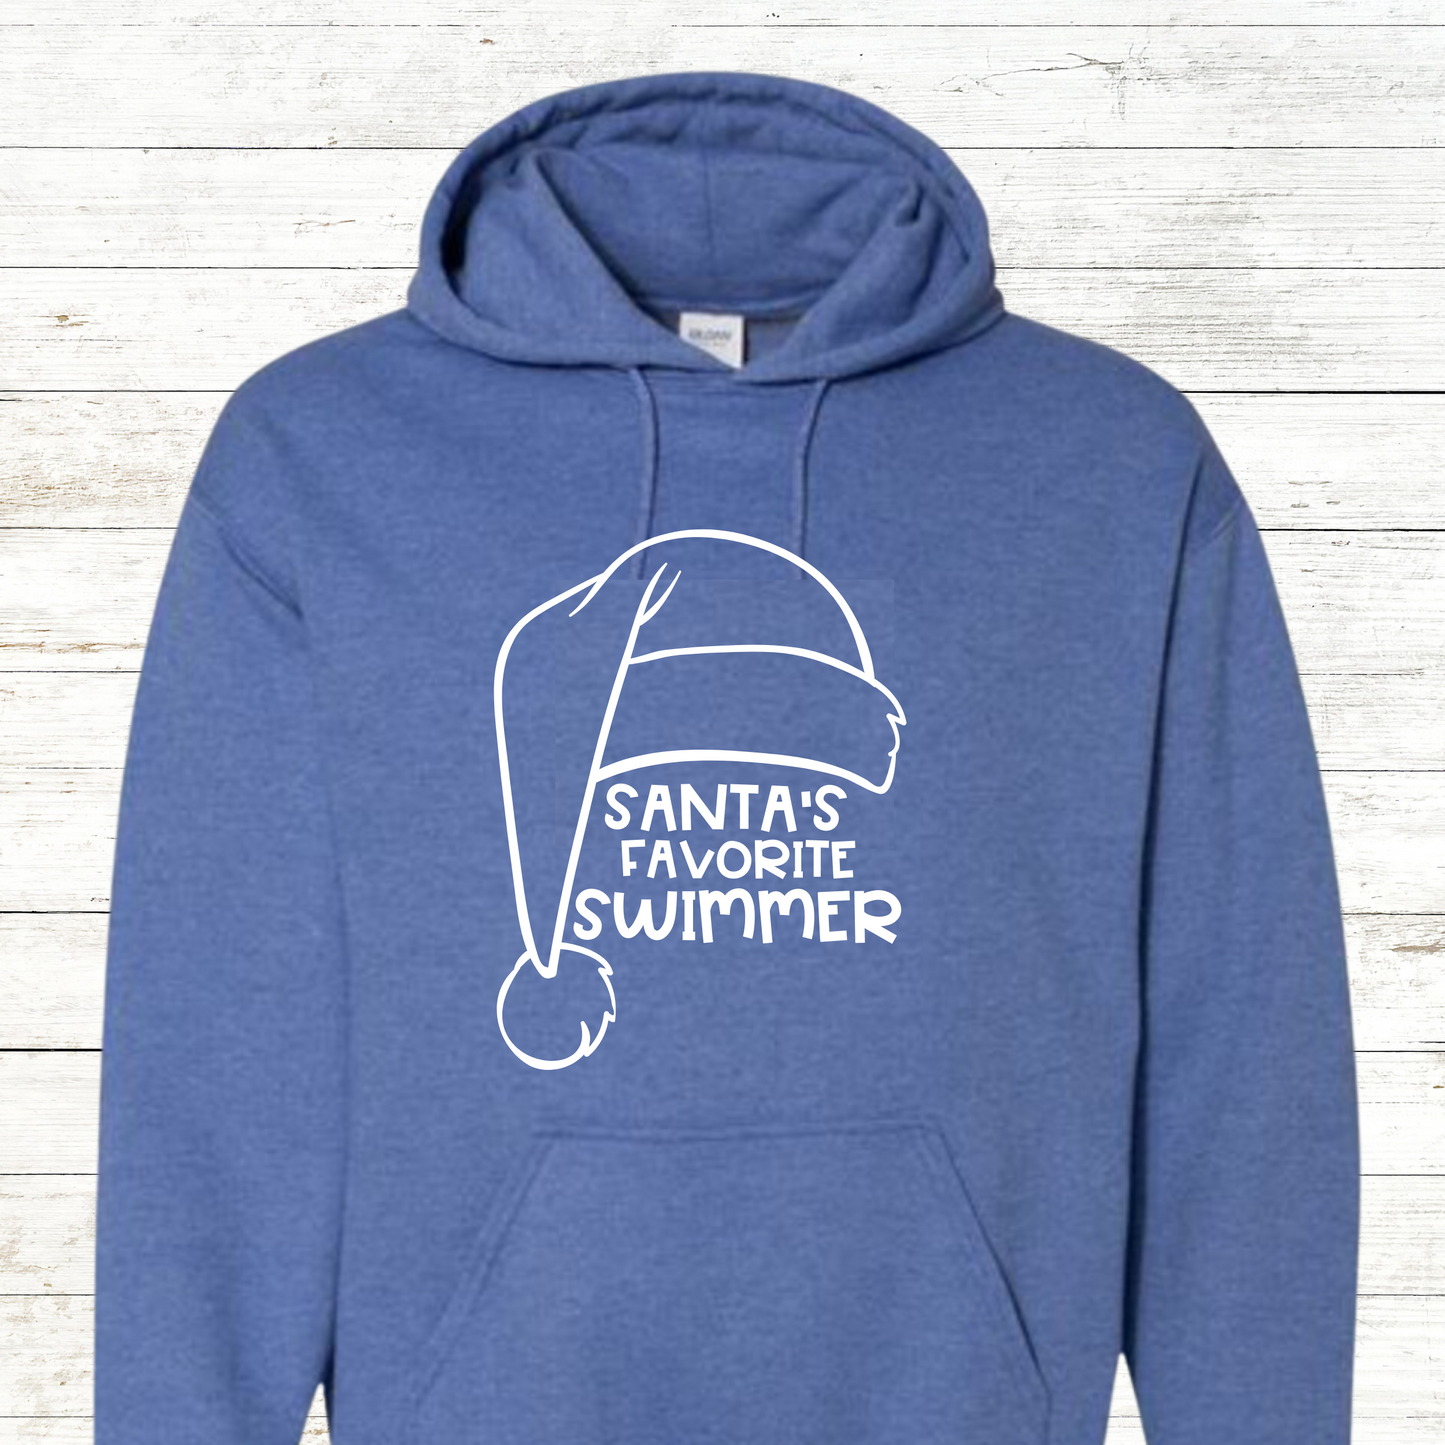 Santa's Favorite Swimmer - Adult Hooded Sweatshirt - Personalized on back option